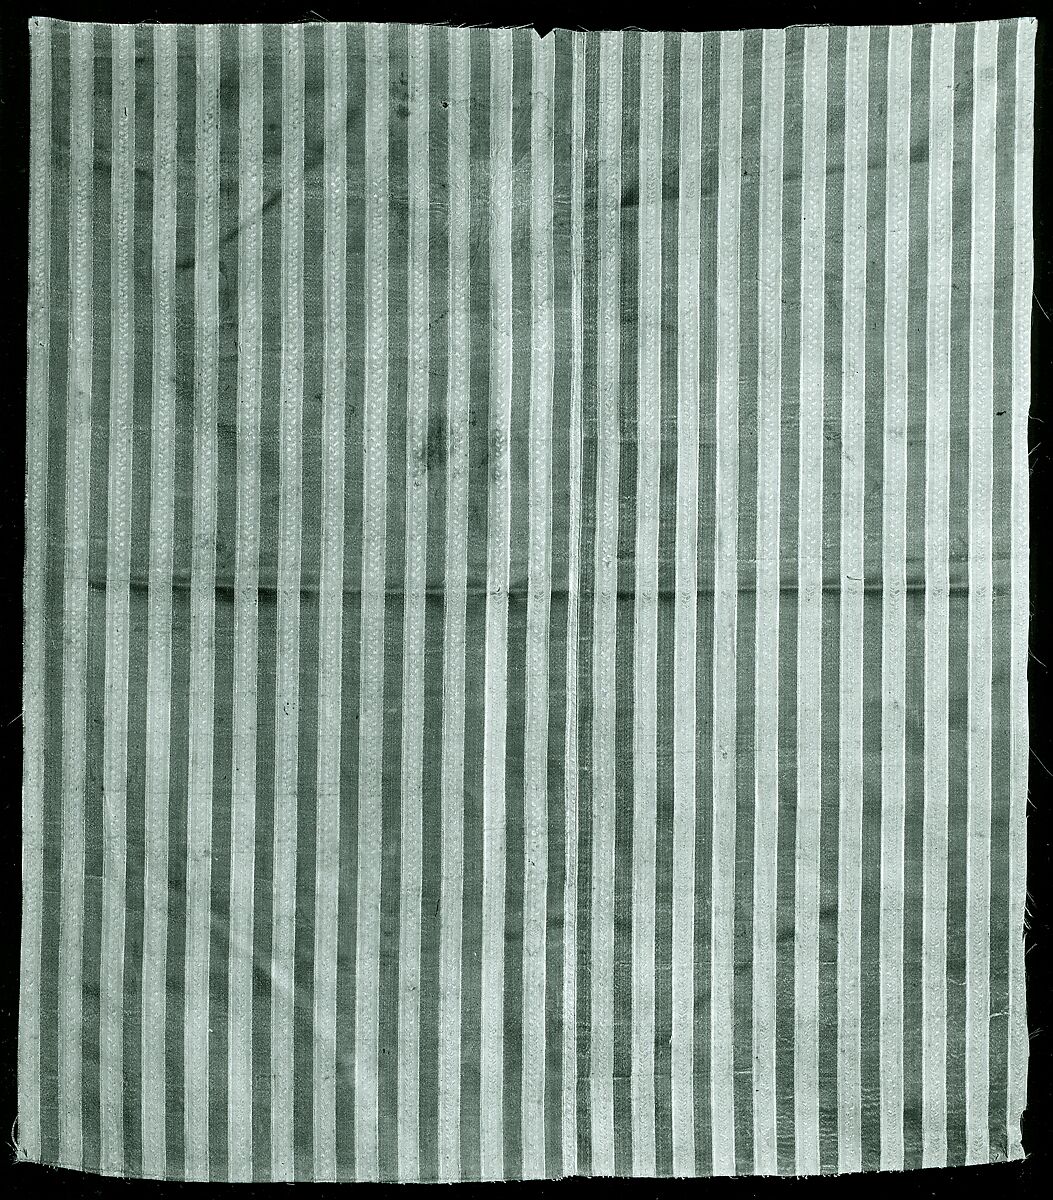 Panel, Silk, Spanish (possibly Valencia or Talavera) 